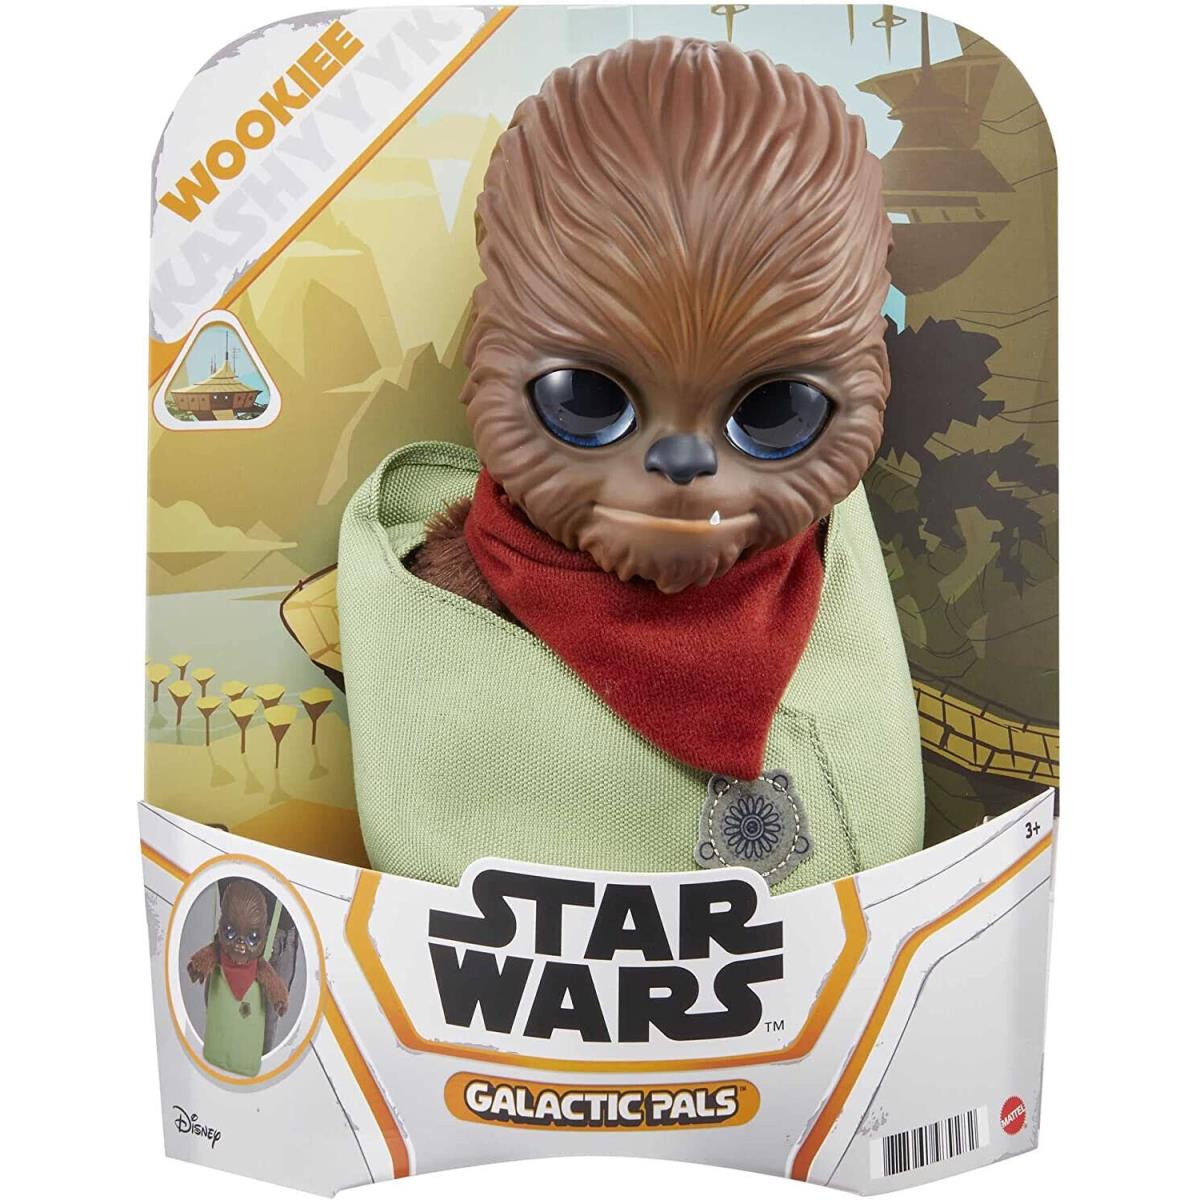 Wookie Galactic Pals - Star Wars Play Item Toy Kids